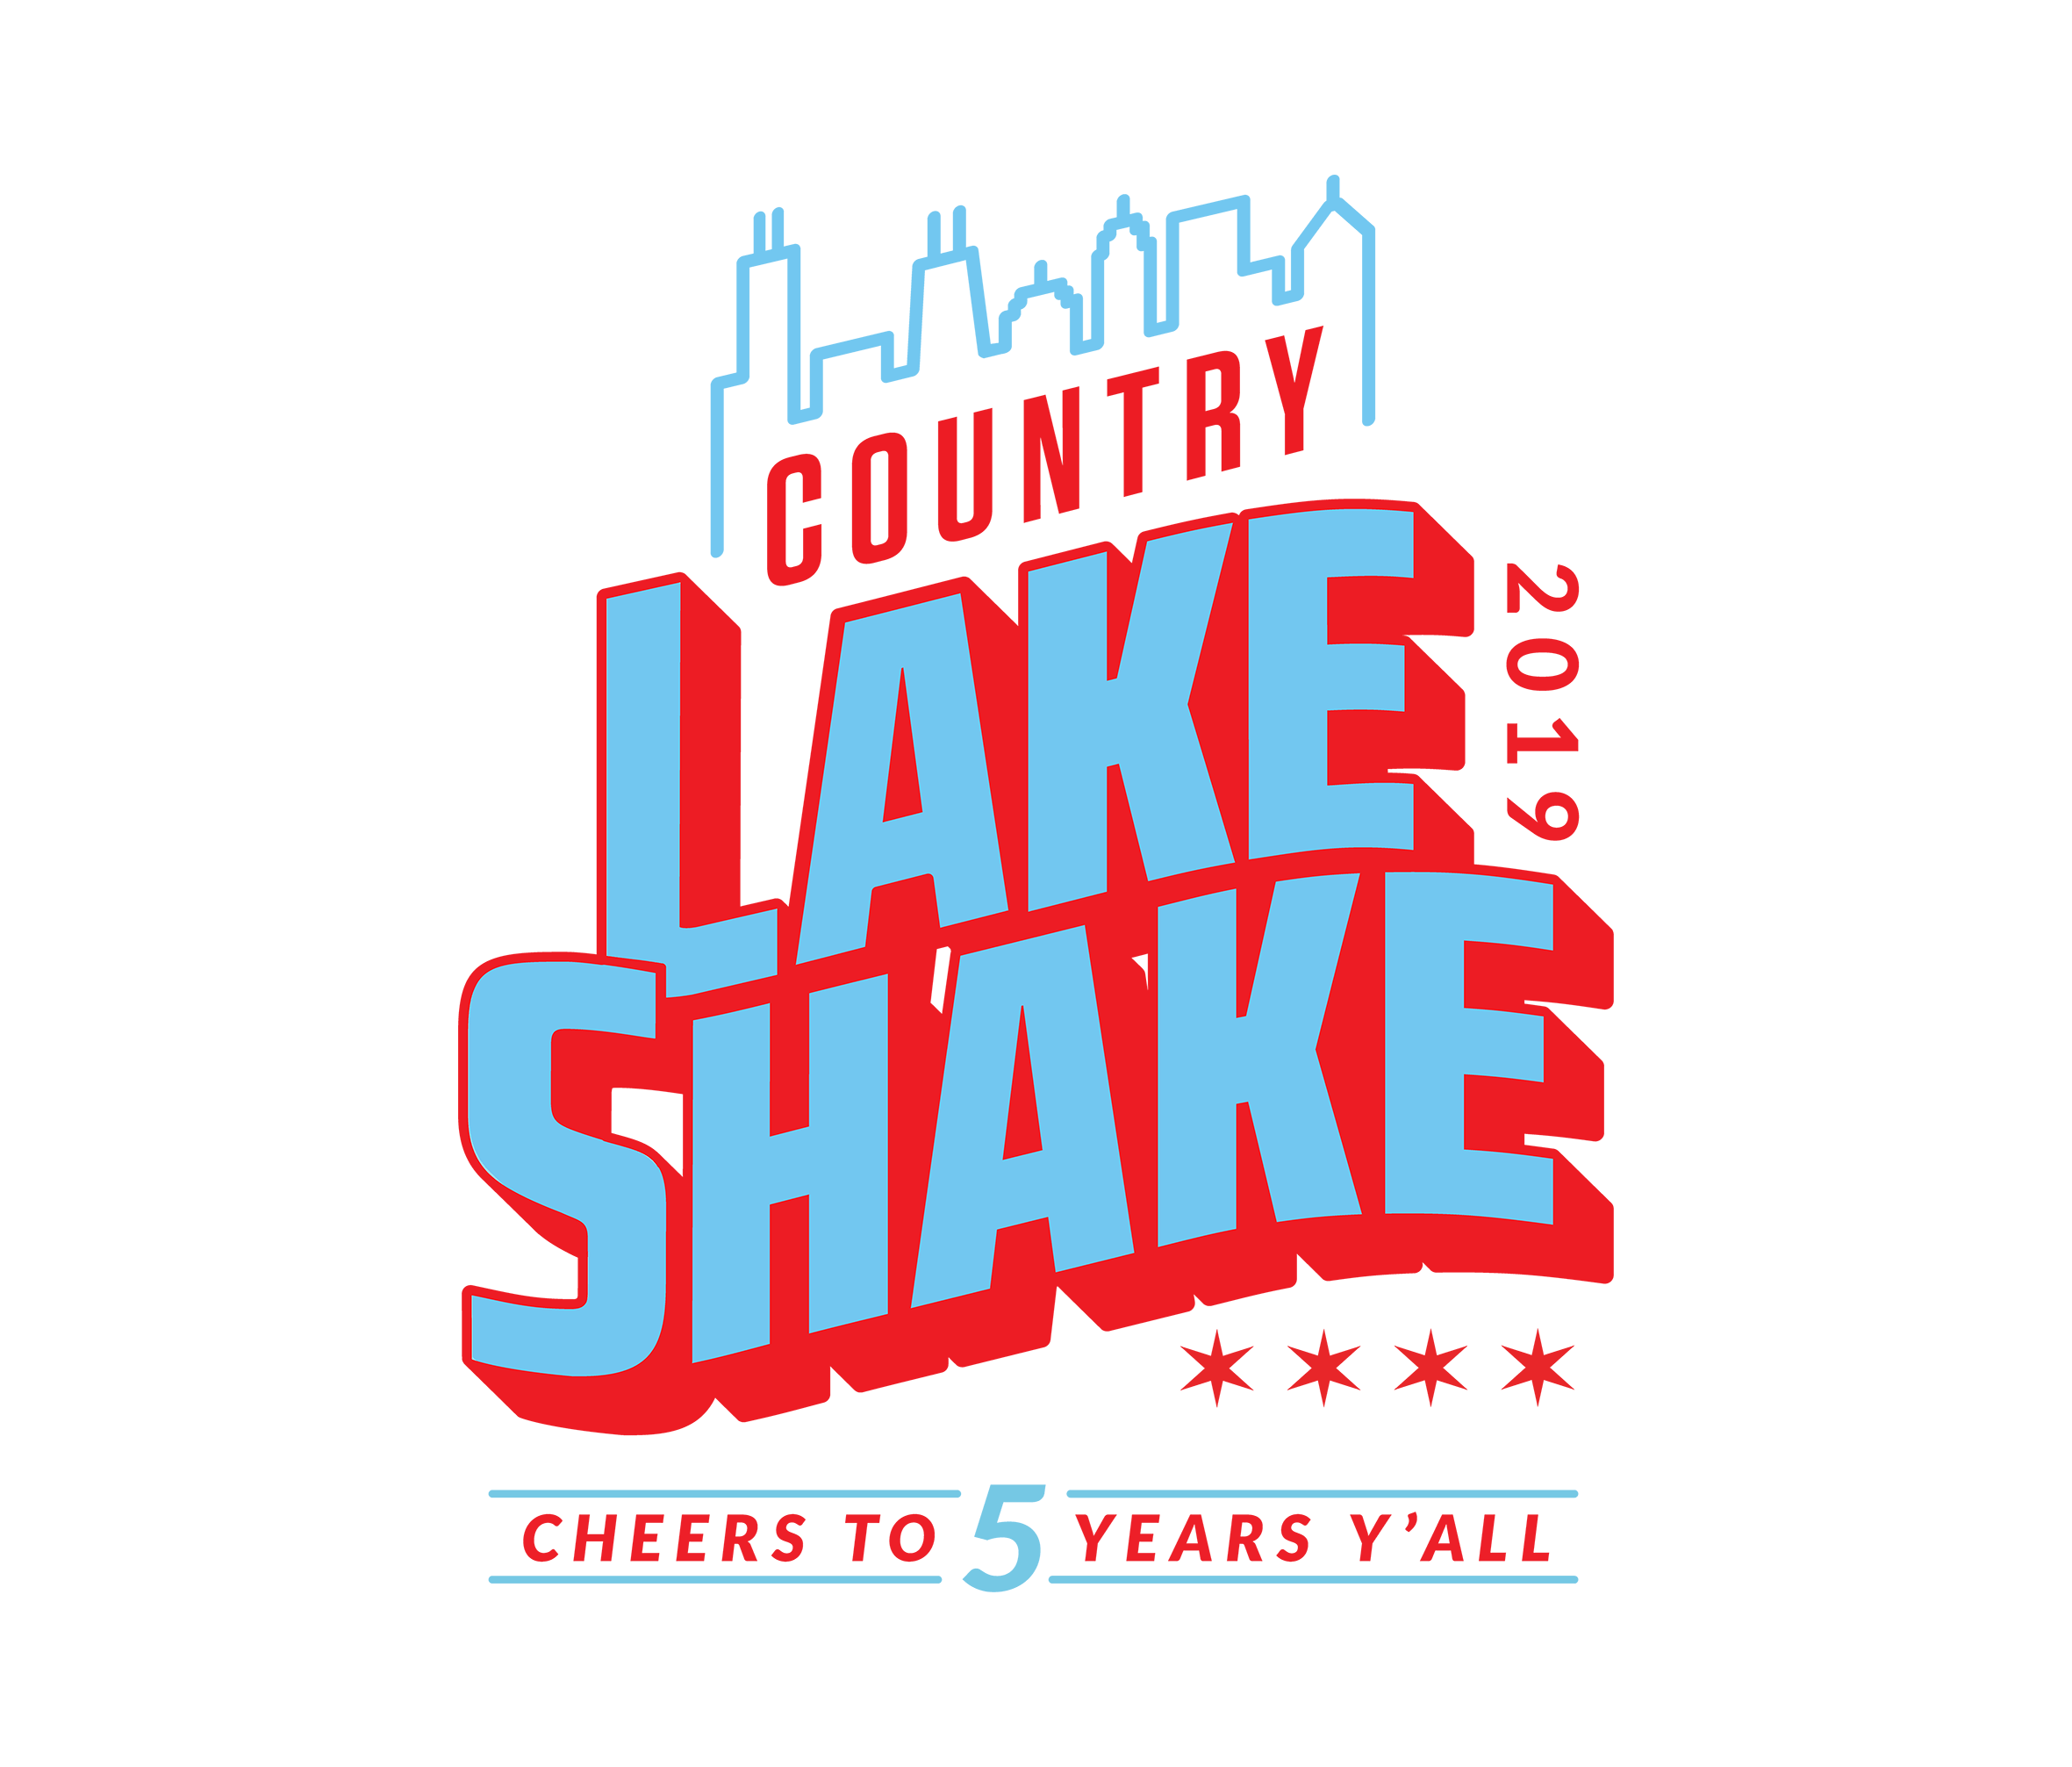 2019 Lake Shake Country Festival primary logo design for 5 years celebration